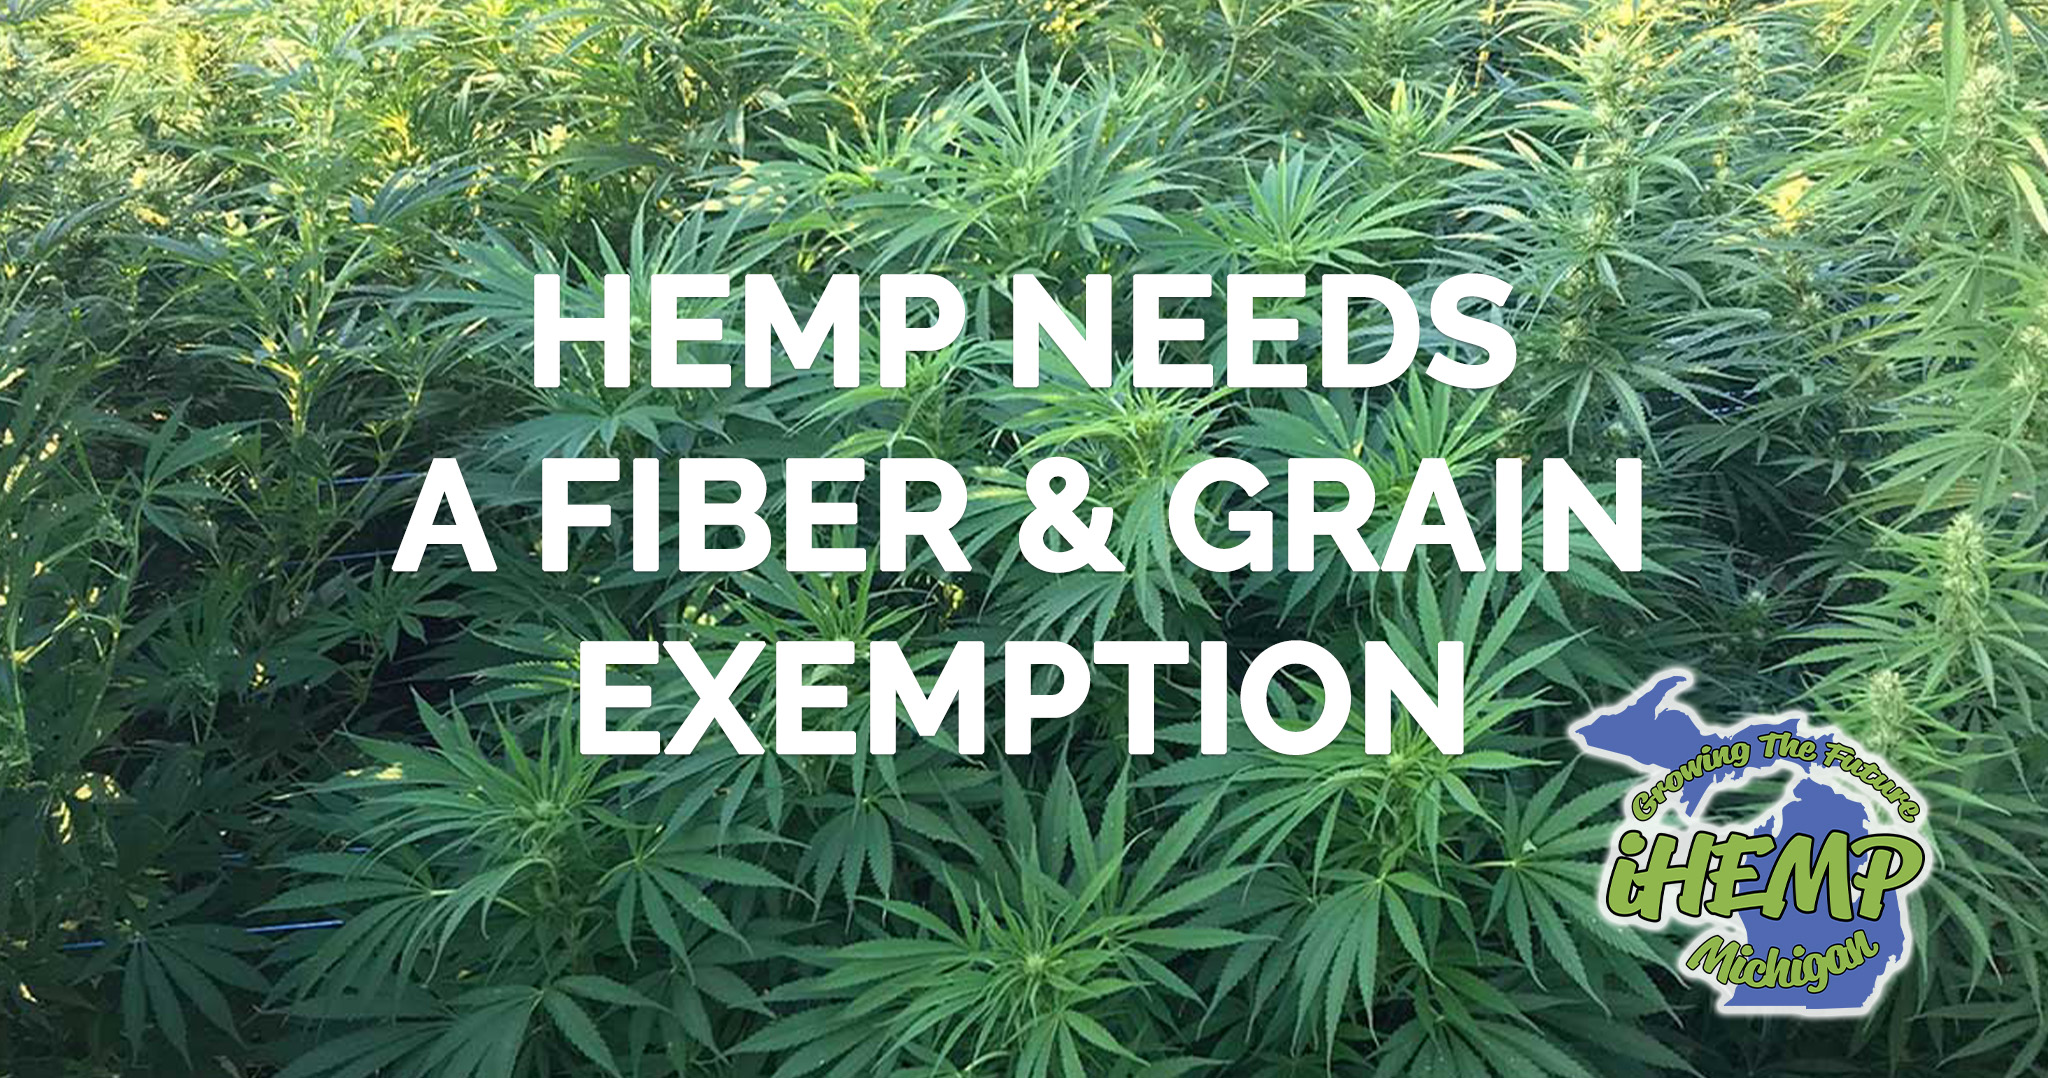 Hemp seed grain exemption